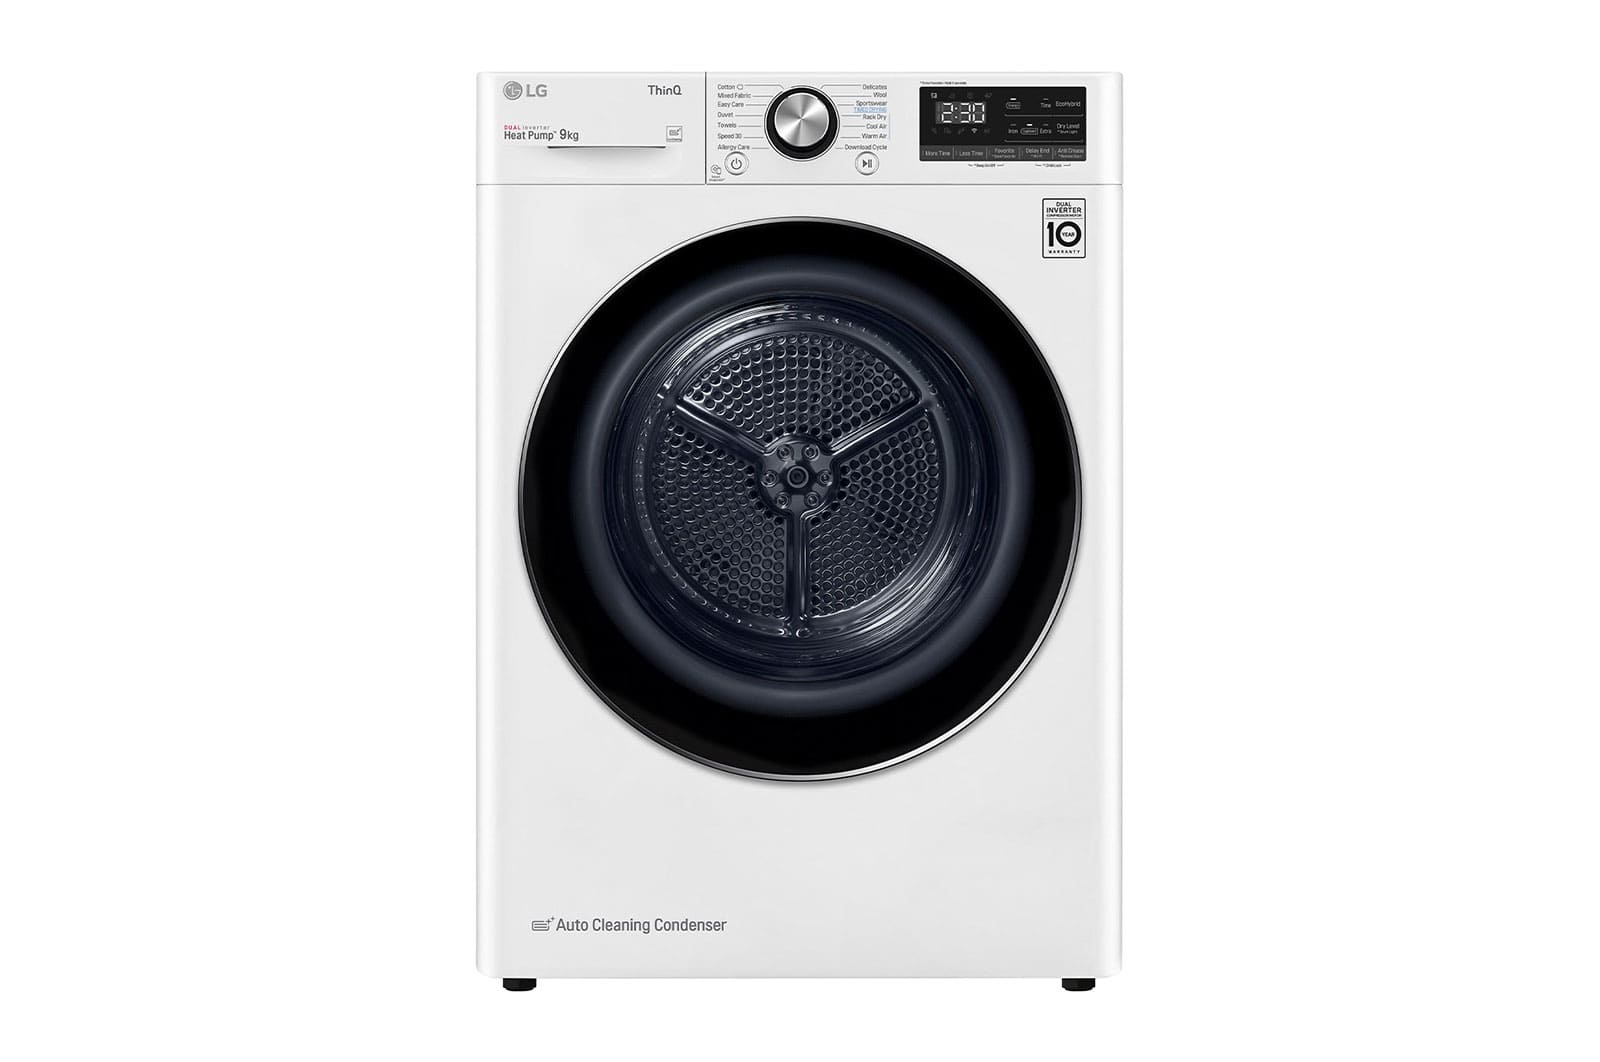 LG-Dryer-9kg-1.jpg